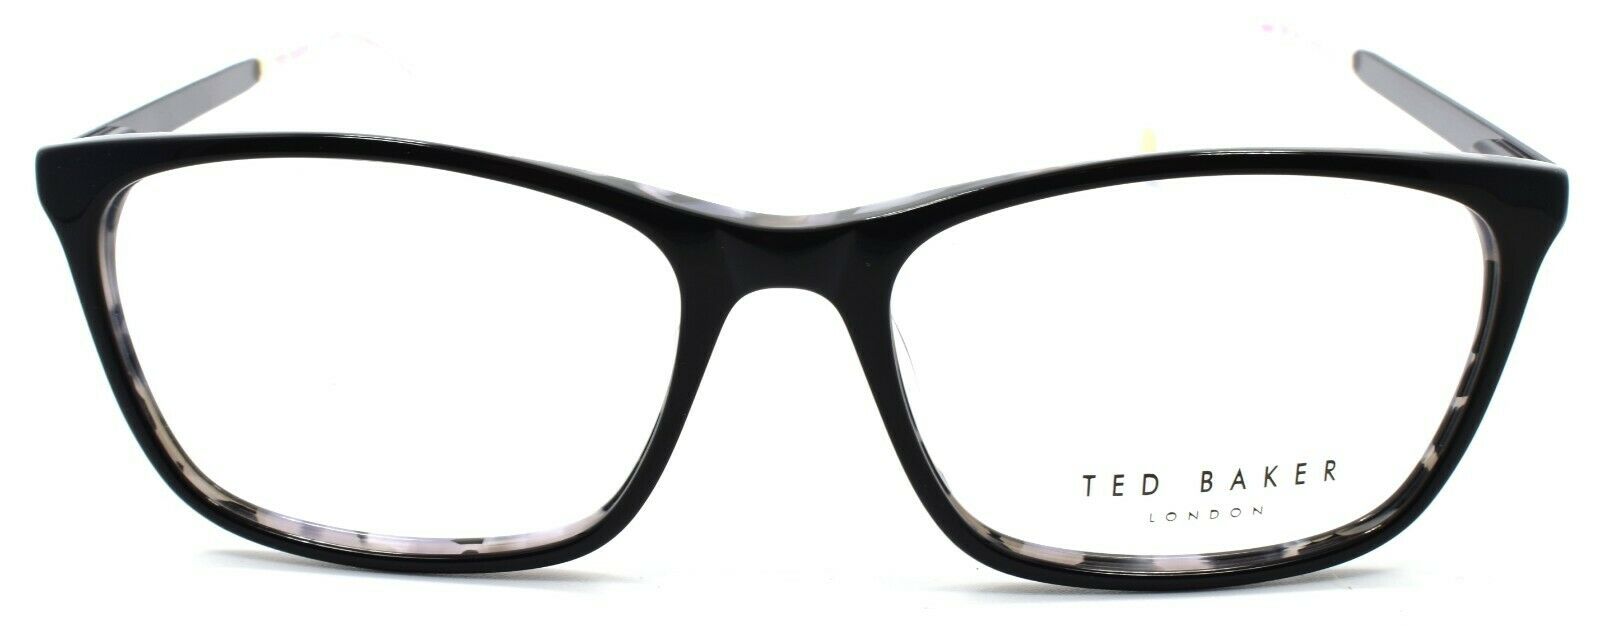 2-Ted Baker Persy 9097 001 Women's Eyeglasses Frames 52-16-140 Black / Marble-4894327097883-IKSpecs